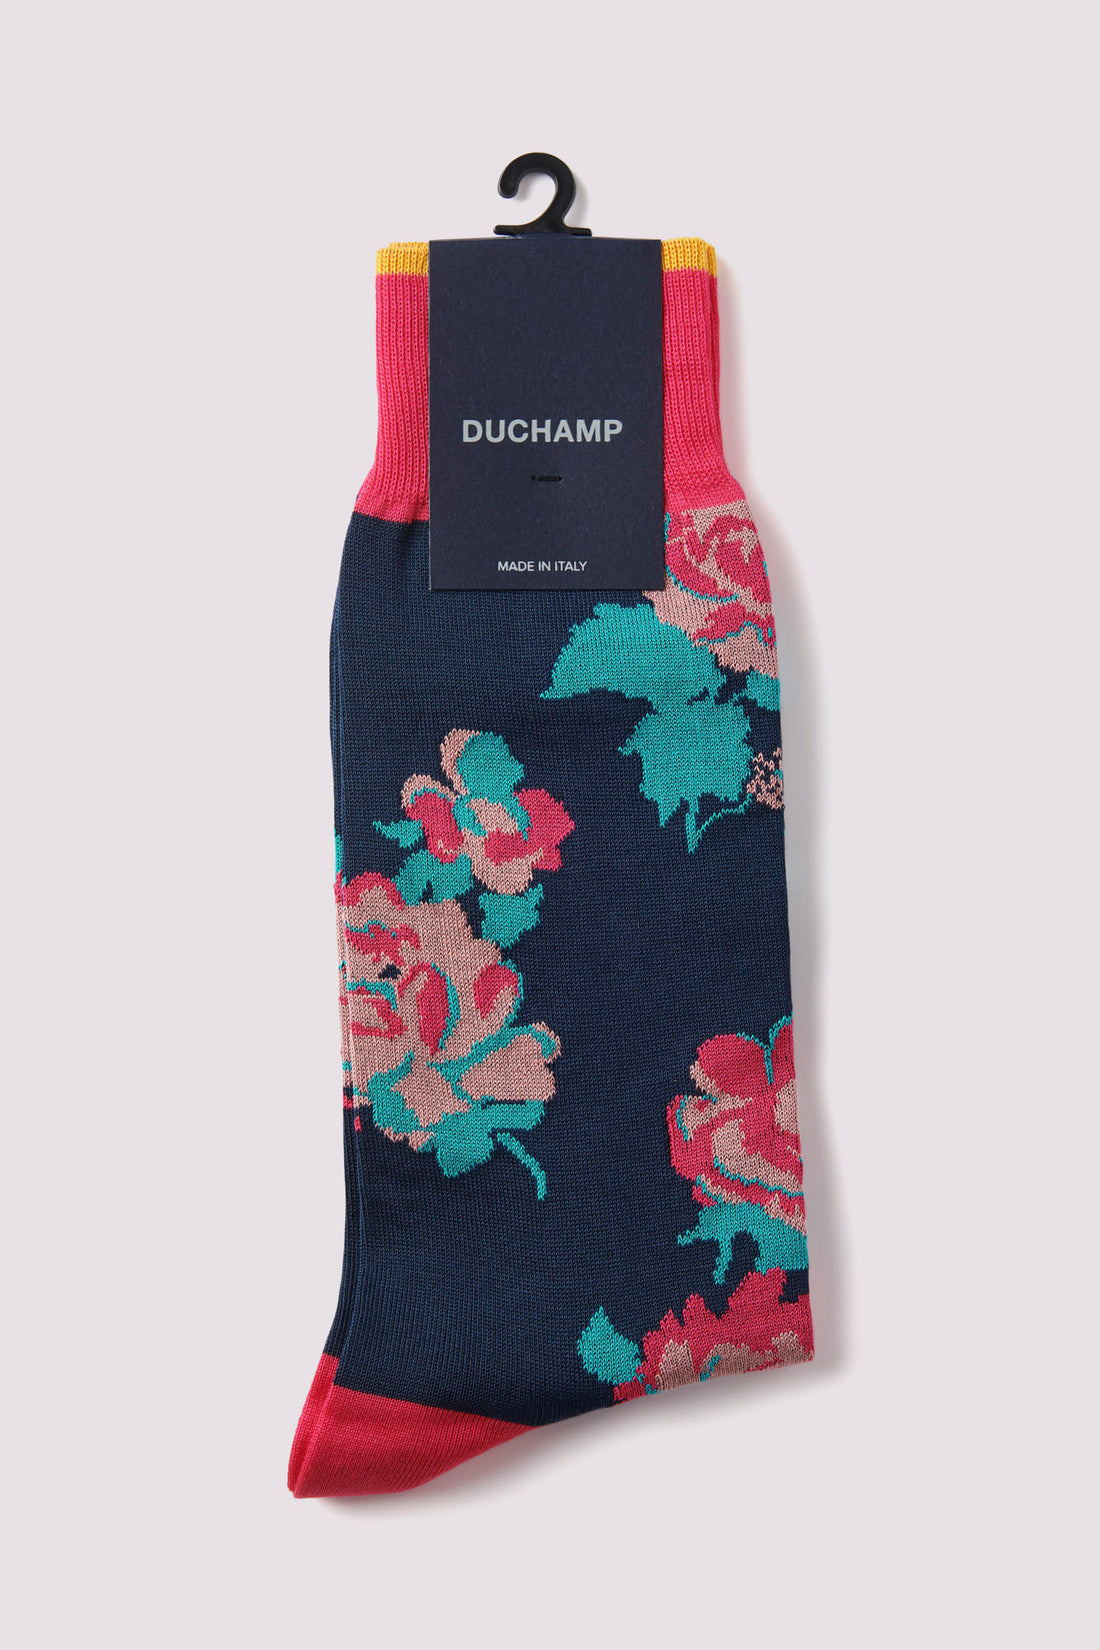 Floral Impression Socks in Fuchsia